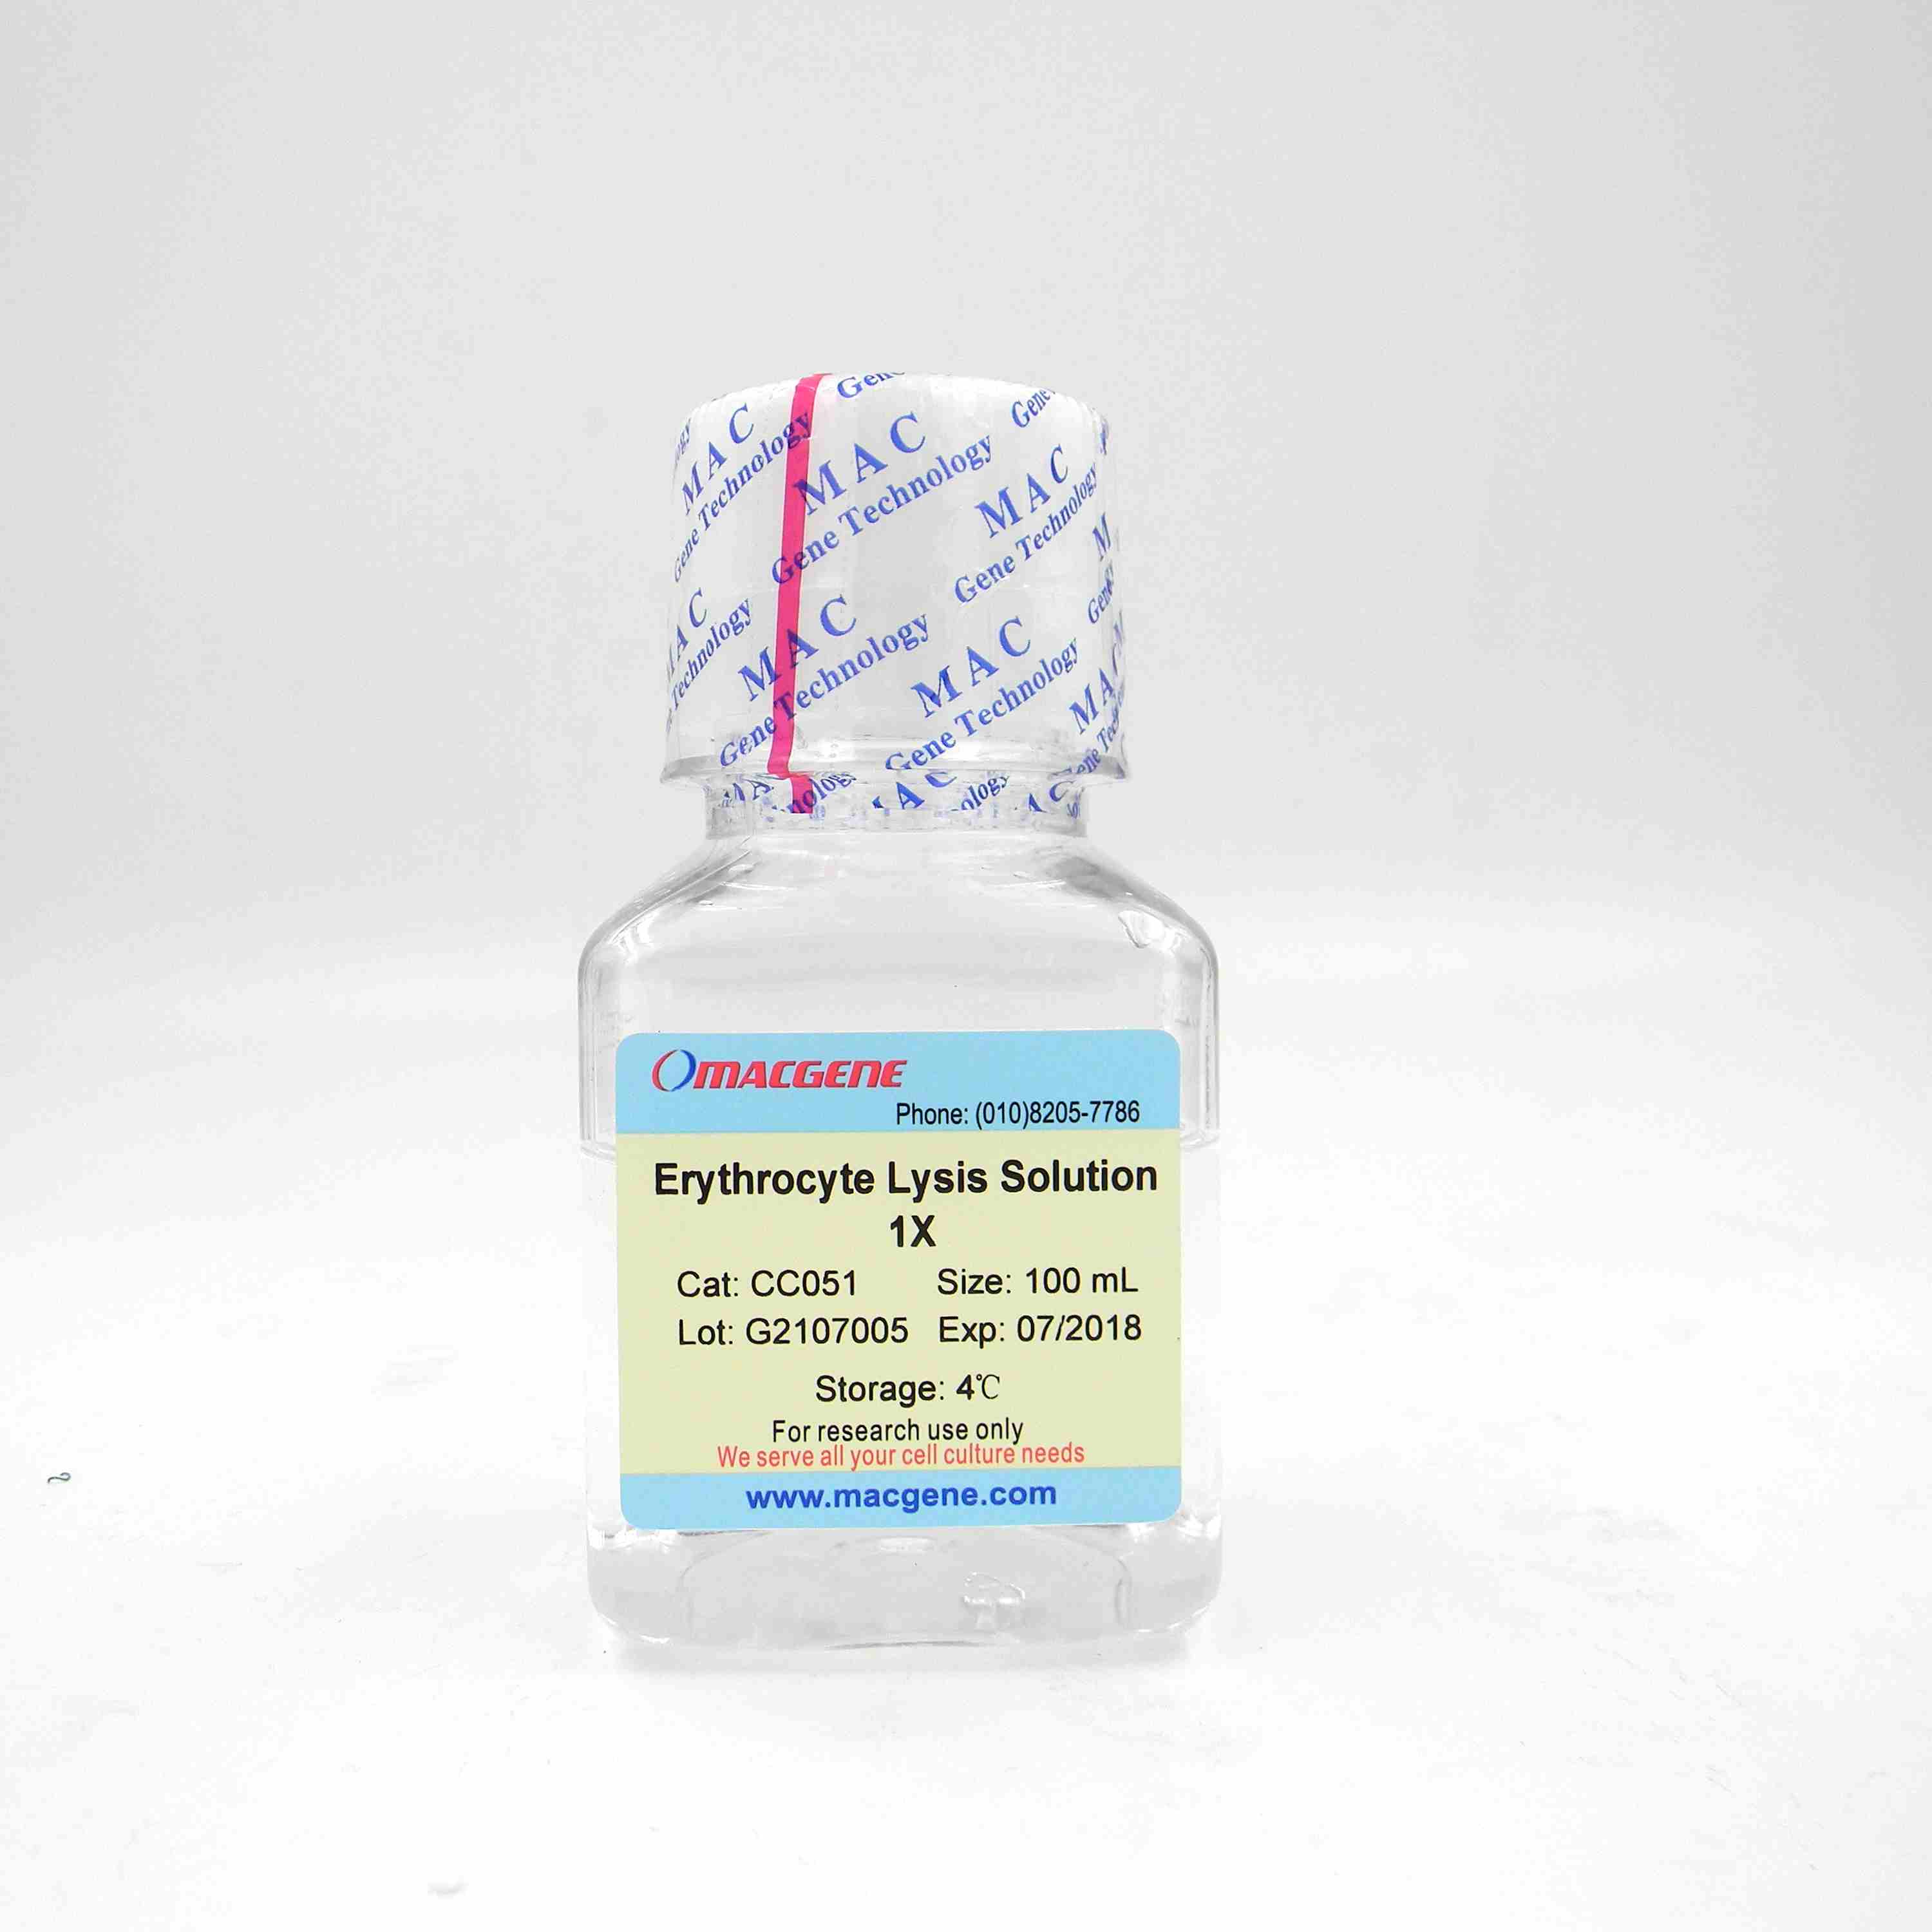 Erythrocyte Lysis Solution, 1X